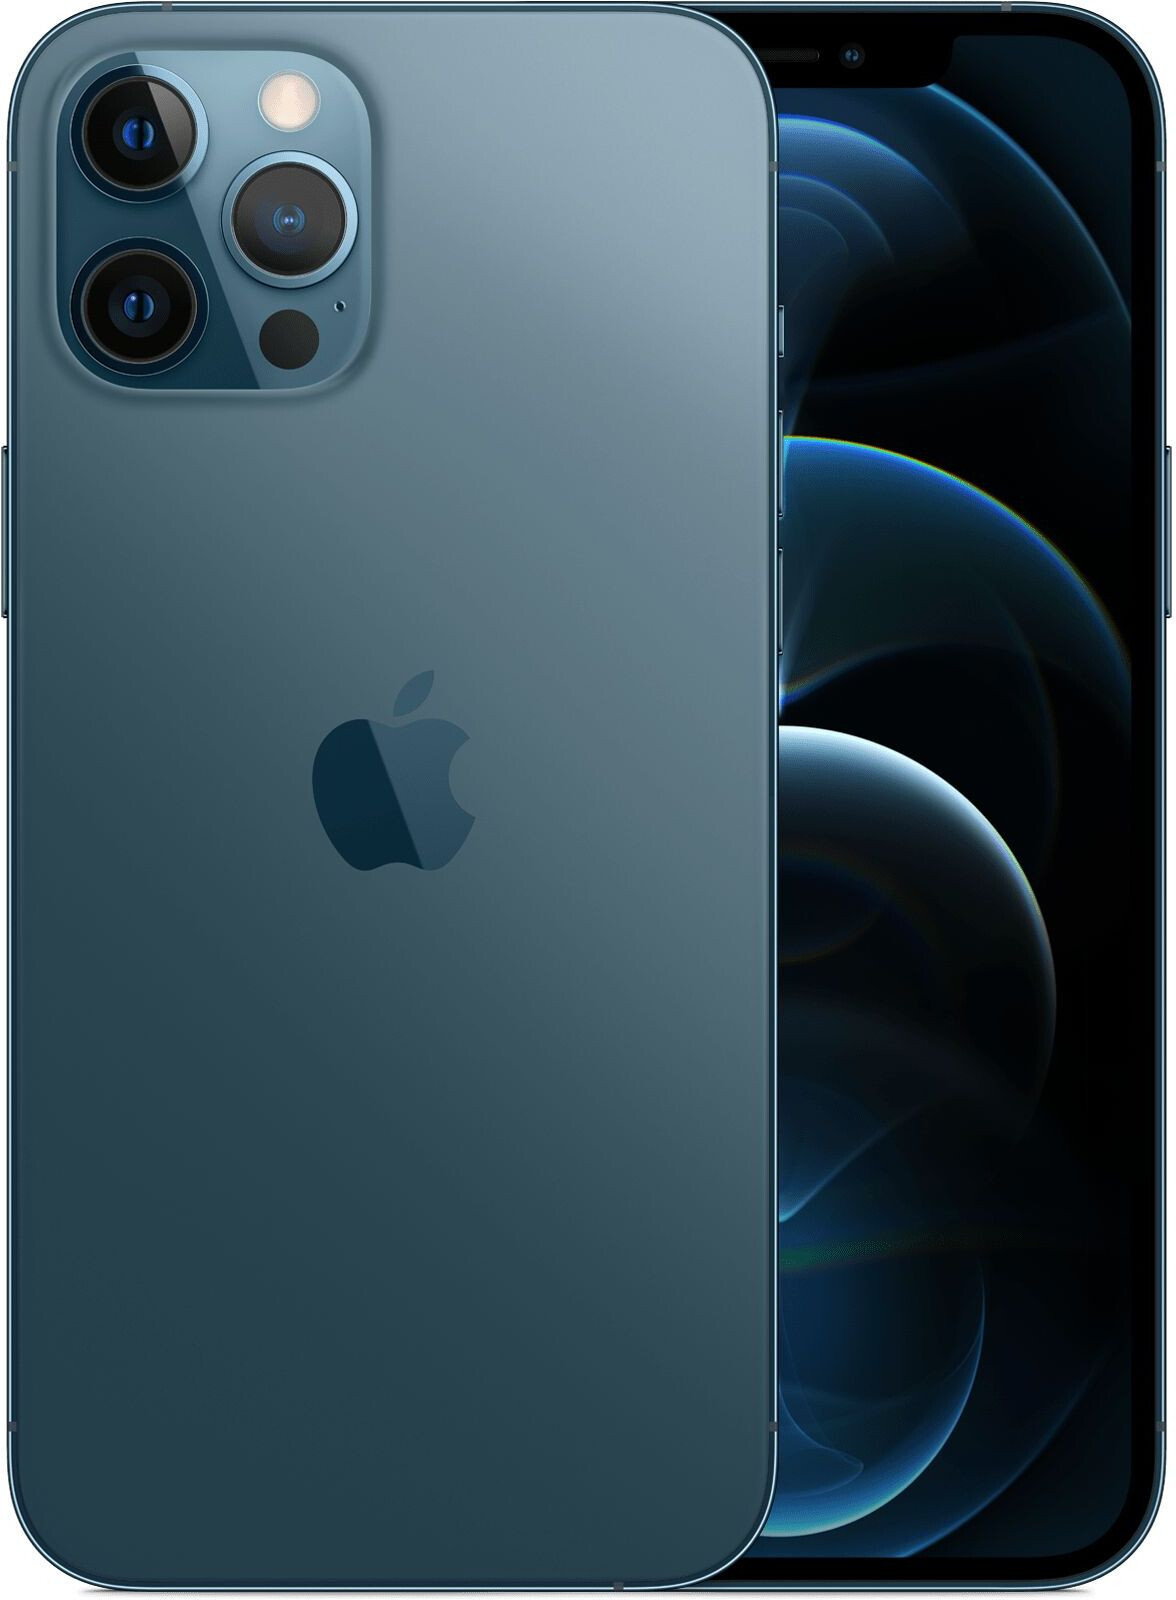 iPhone 12 Pro Max 512gb, Pacific Blue (MGDL3) 